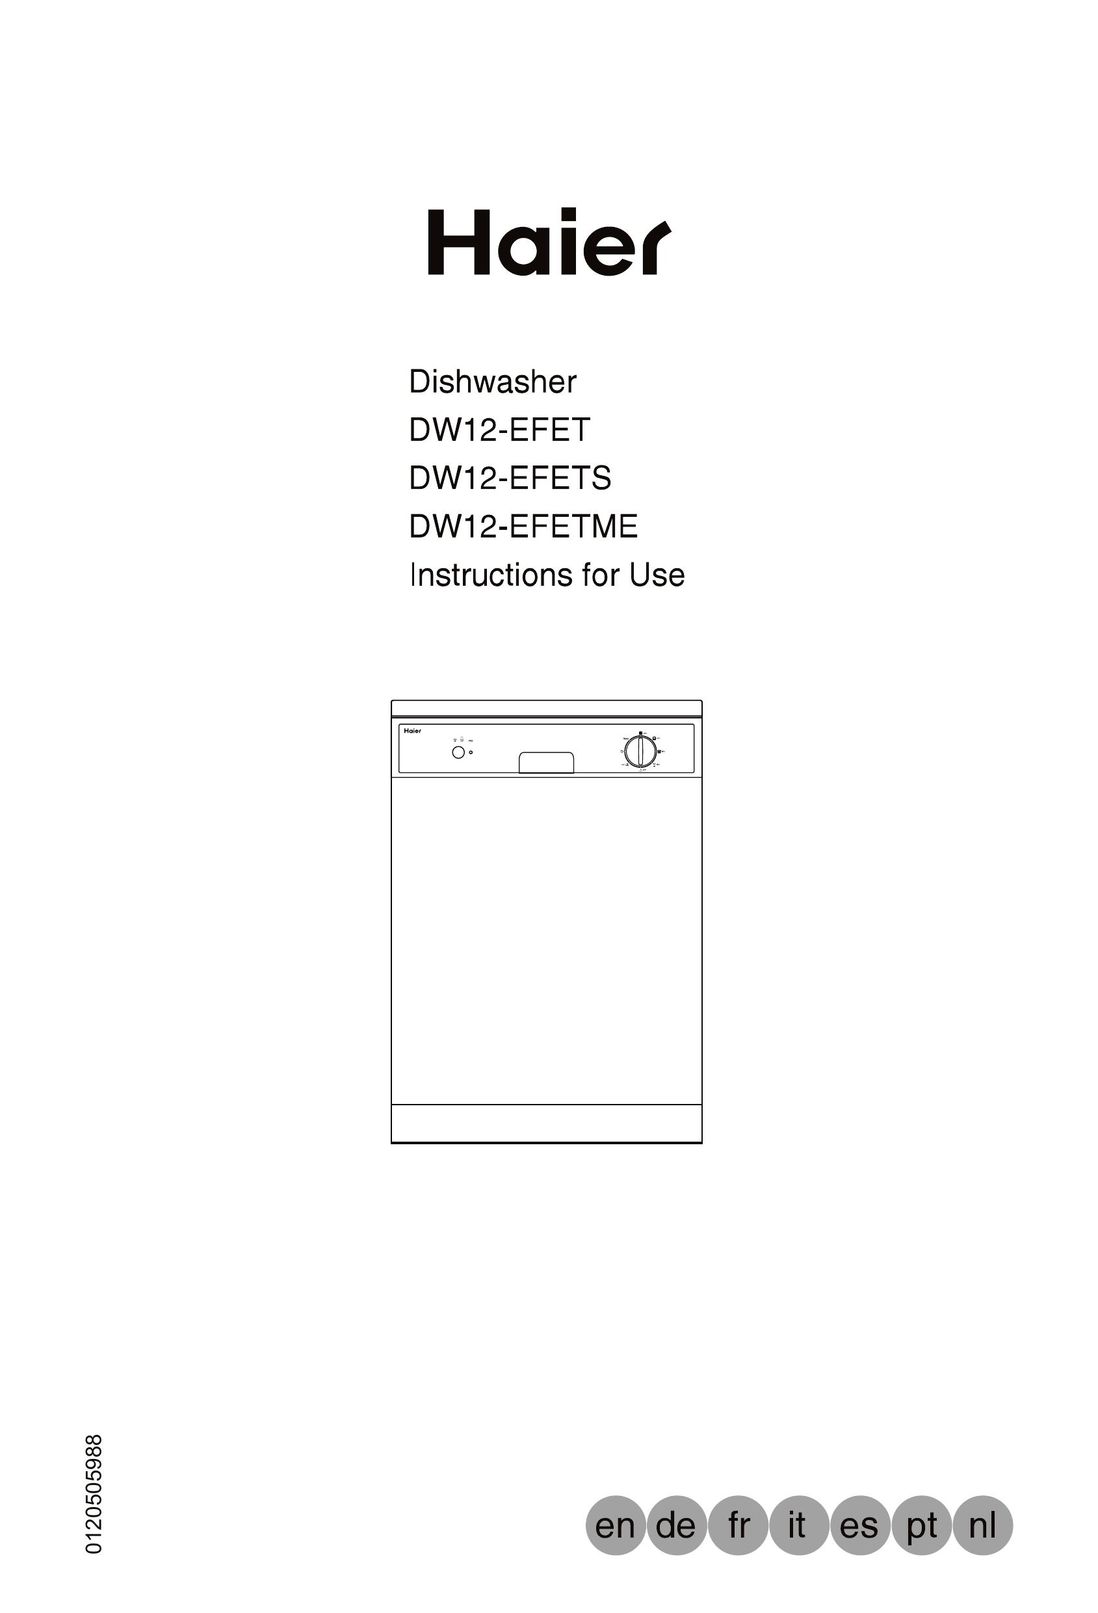 Haier DW12-EFETS Dishwasher User Manual